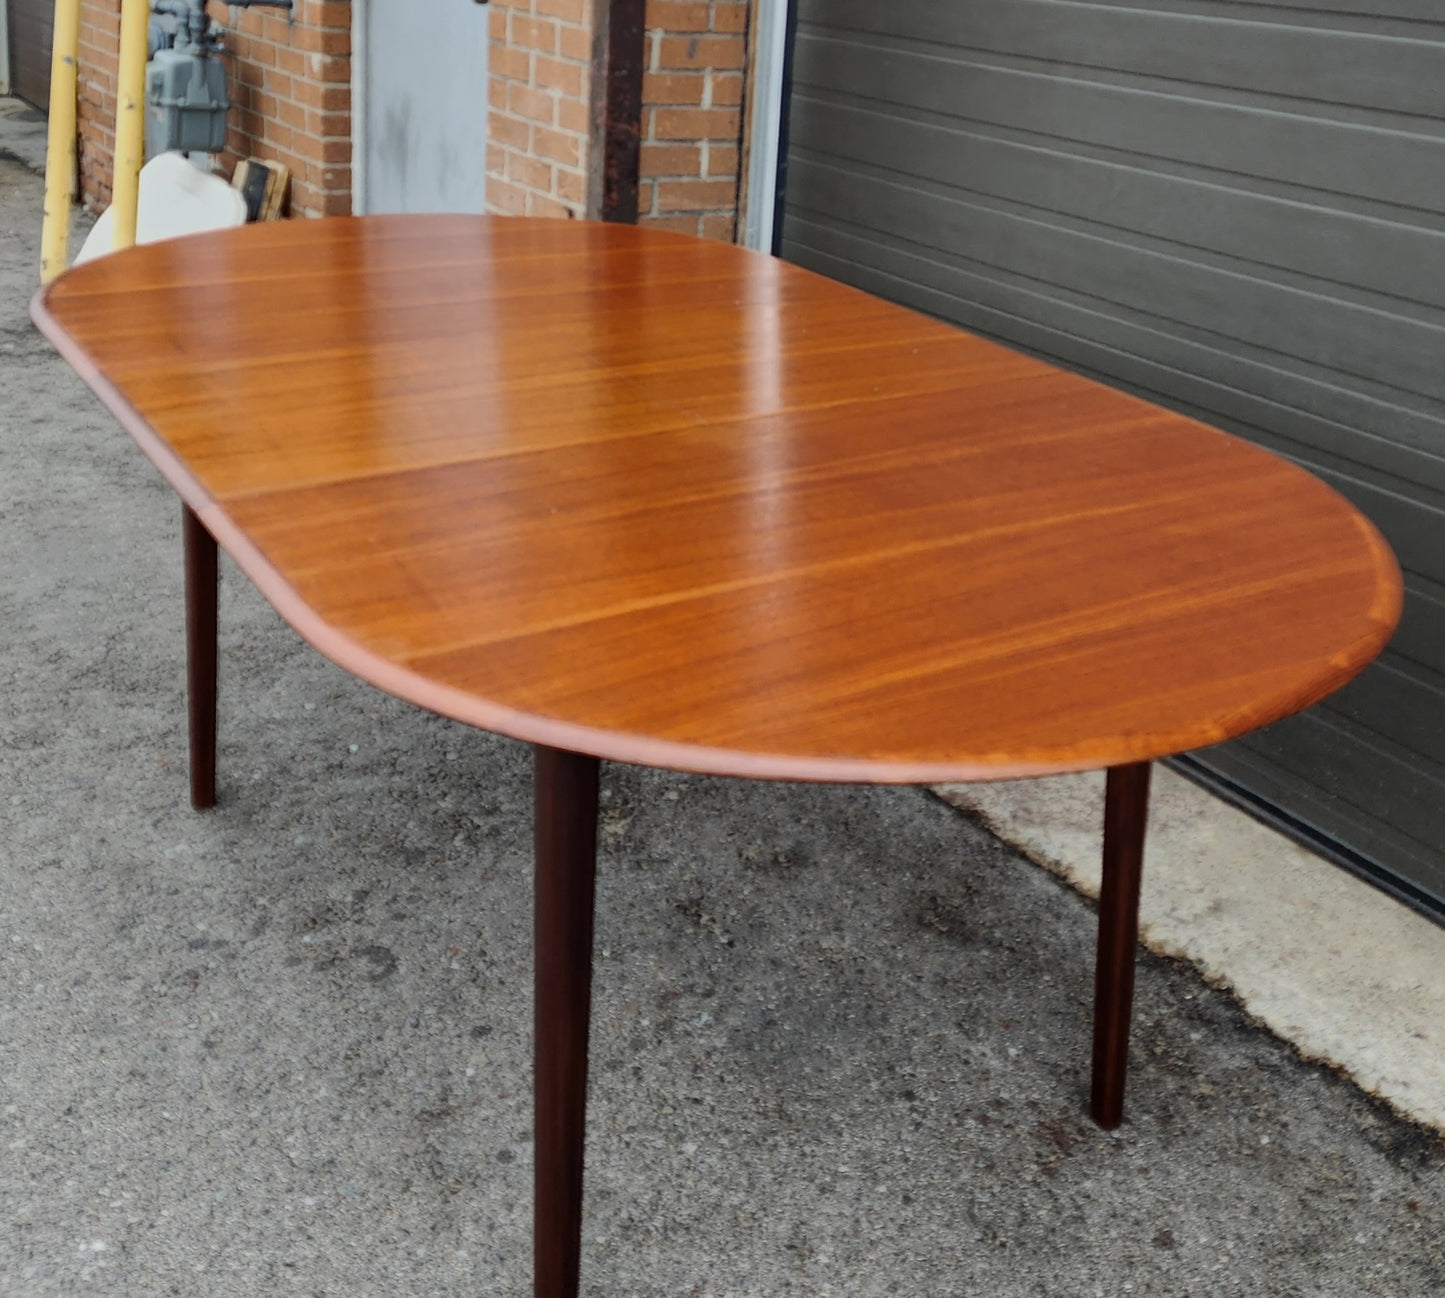 REFINISHED Mid Century Modern Teak Table Oval w Butterfly Leaf 62"- 80"